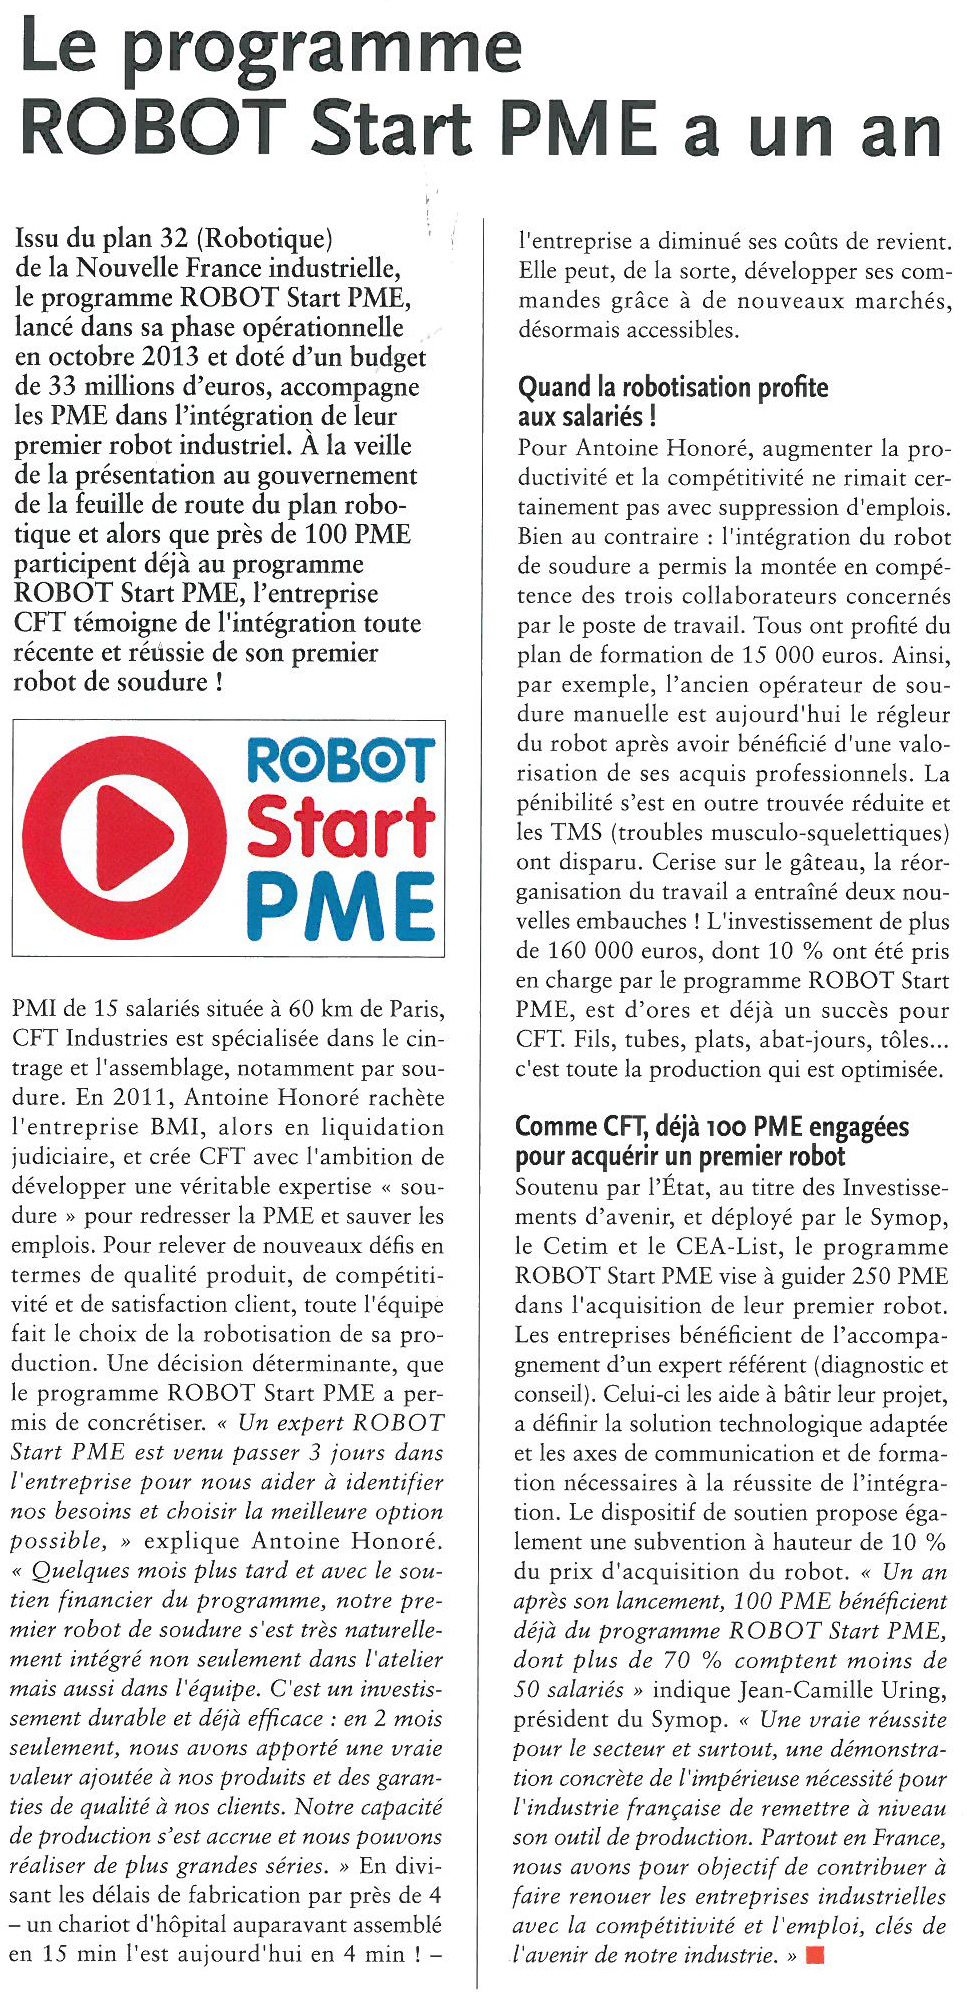 ROBOT start PME